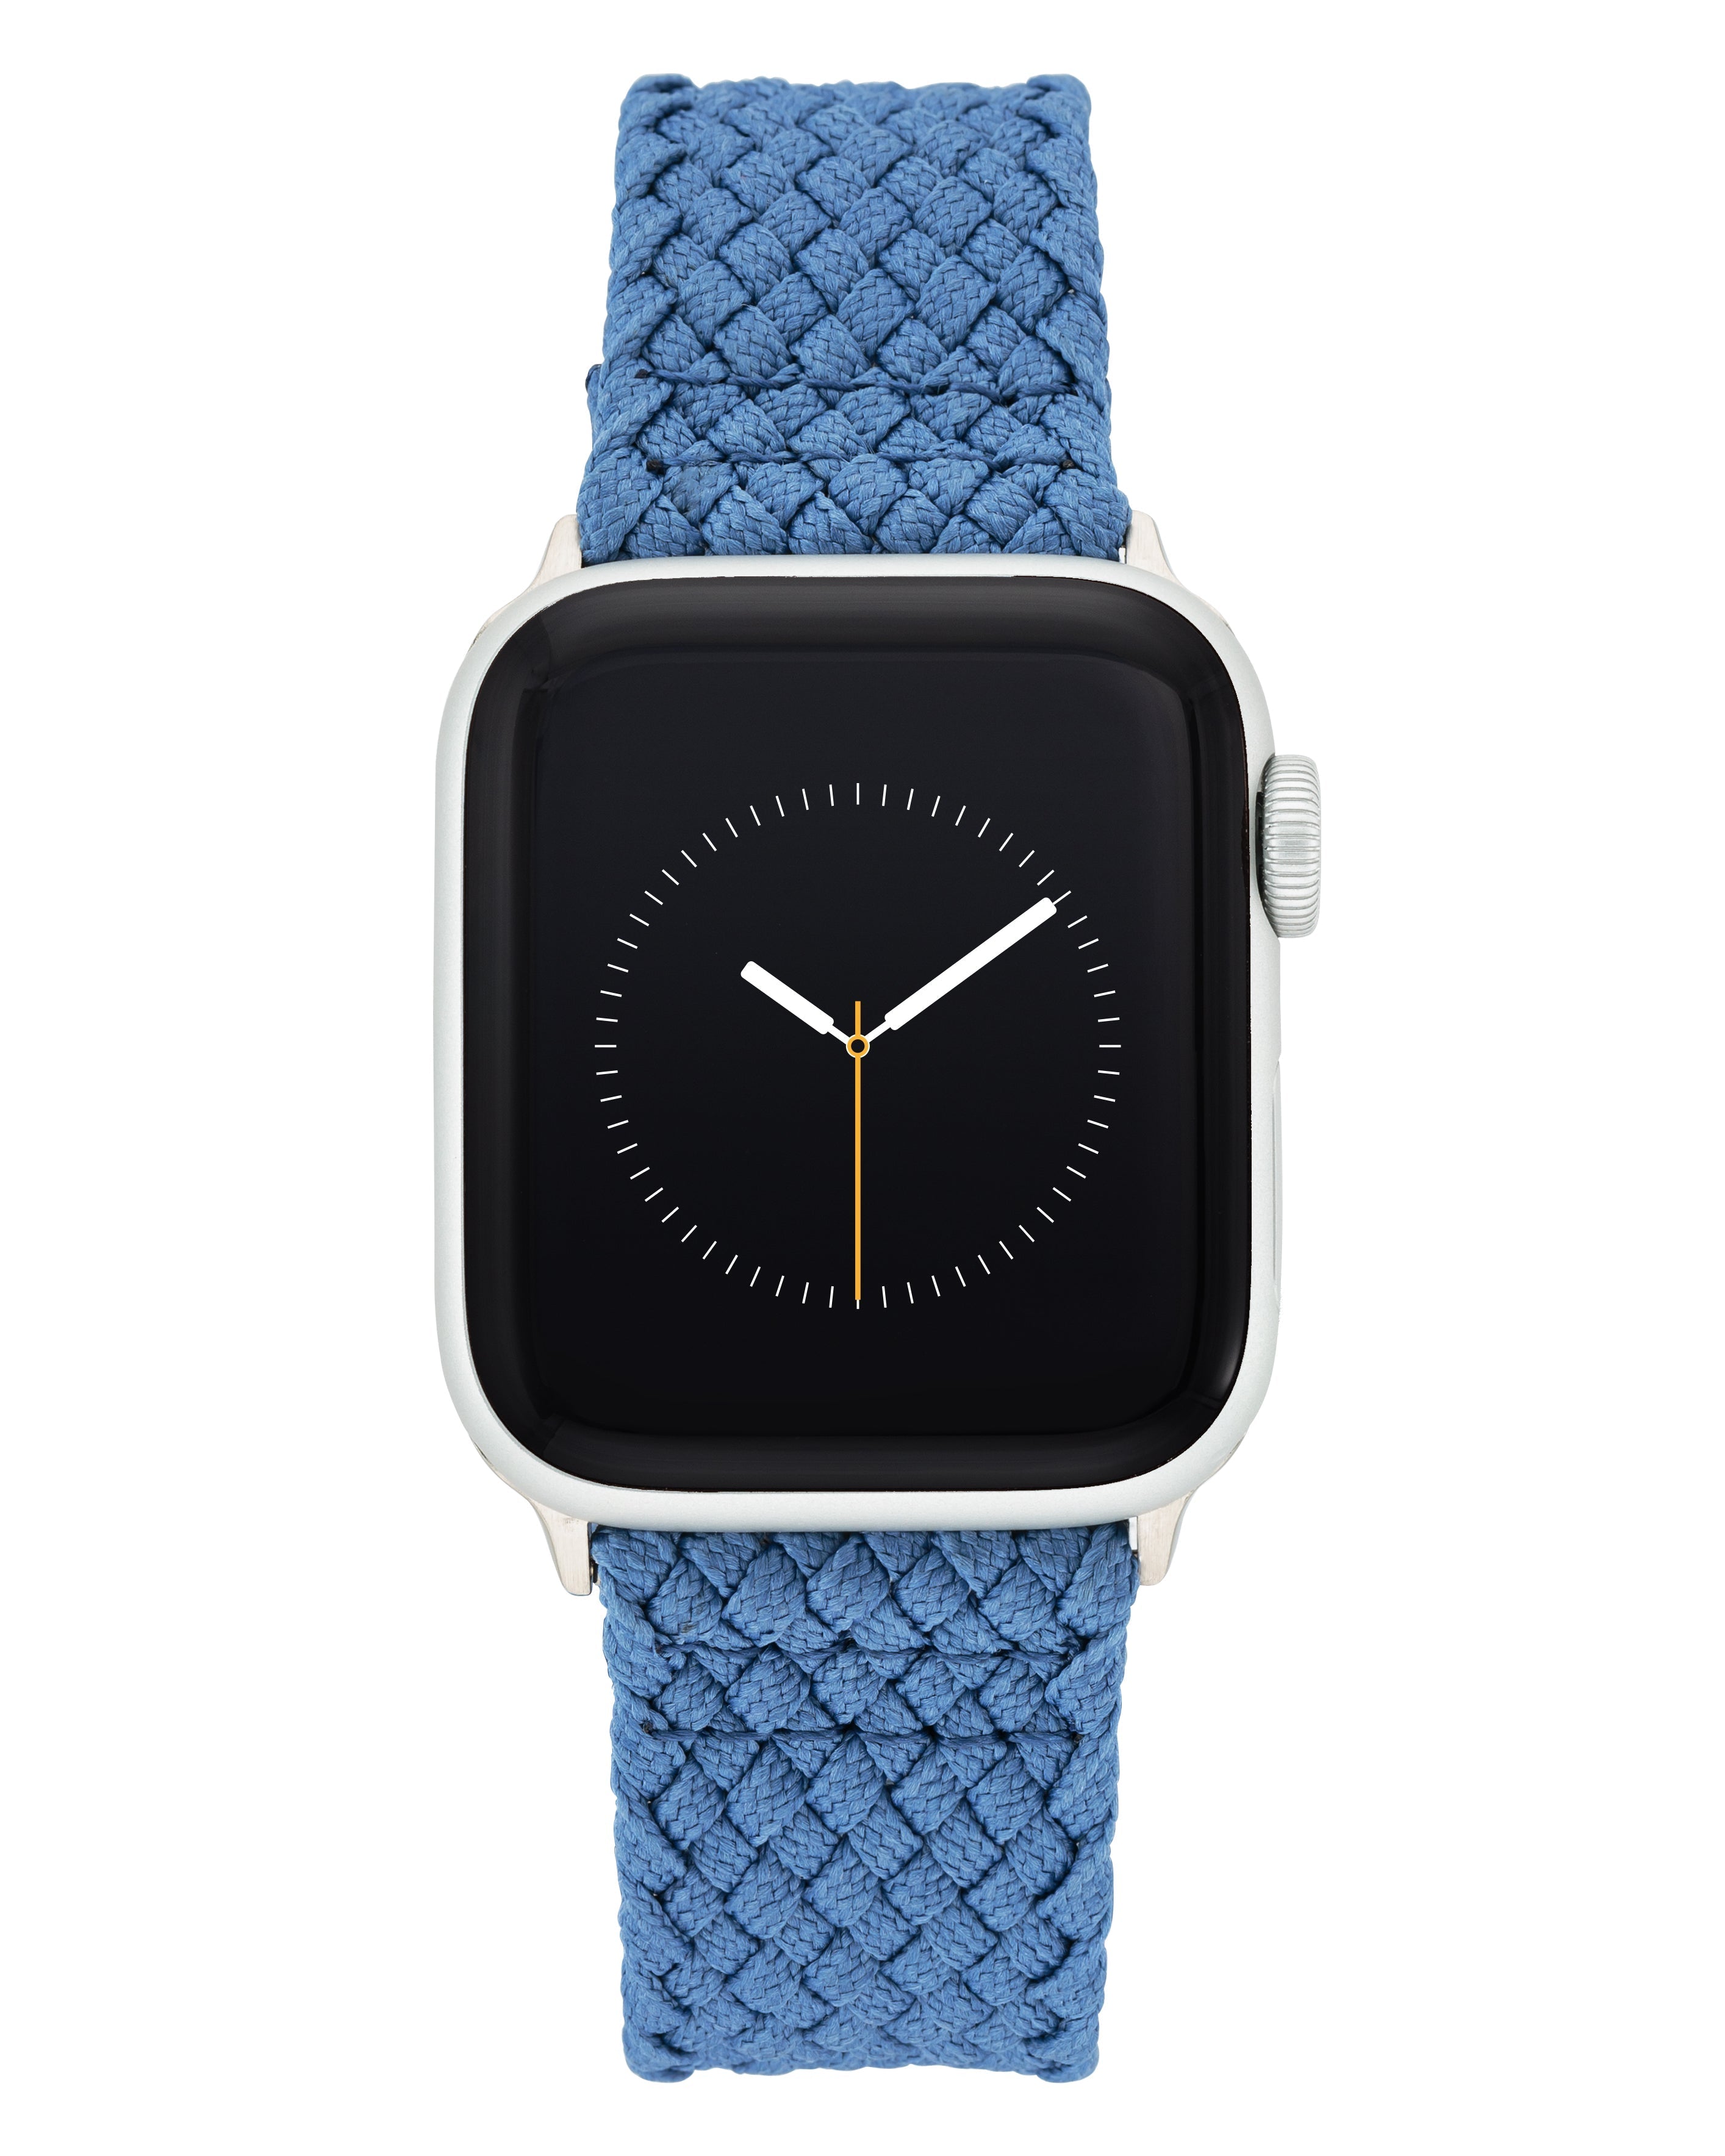 Woven Elastic Perlon Band for Apple Watch®